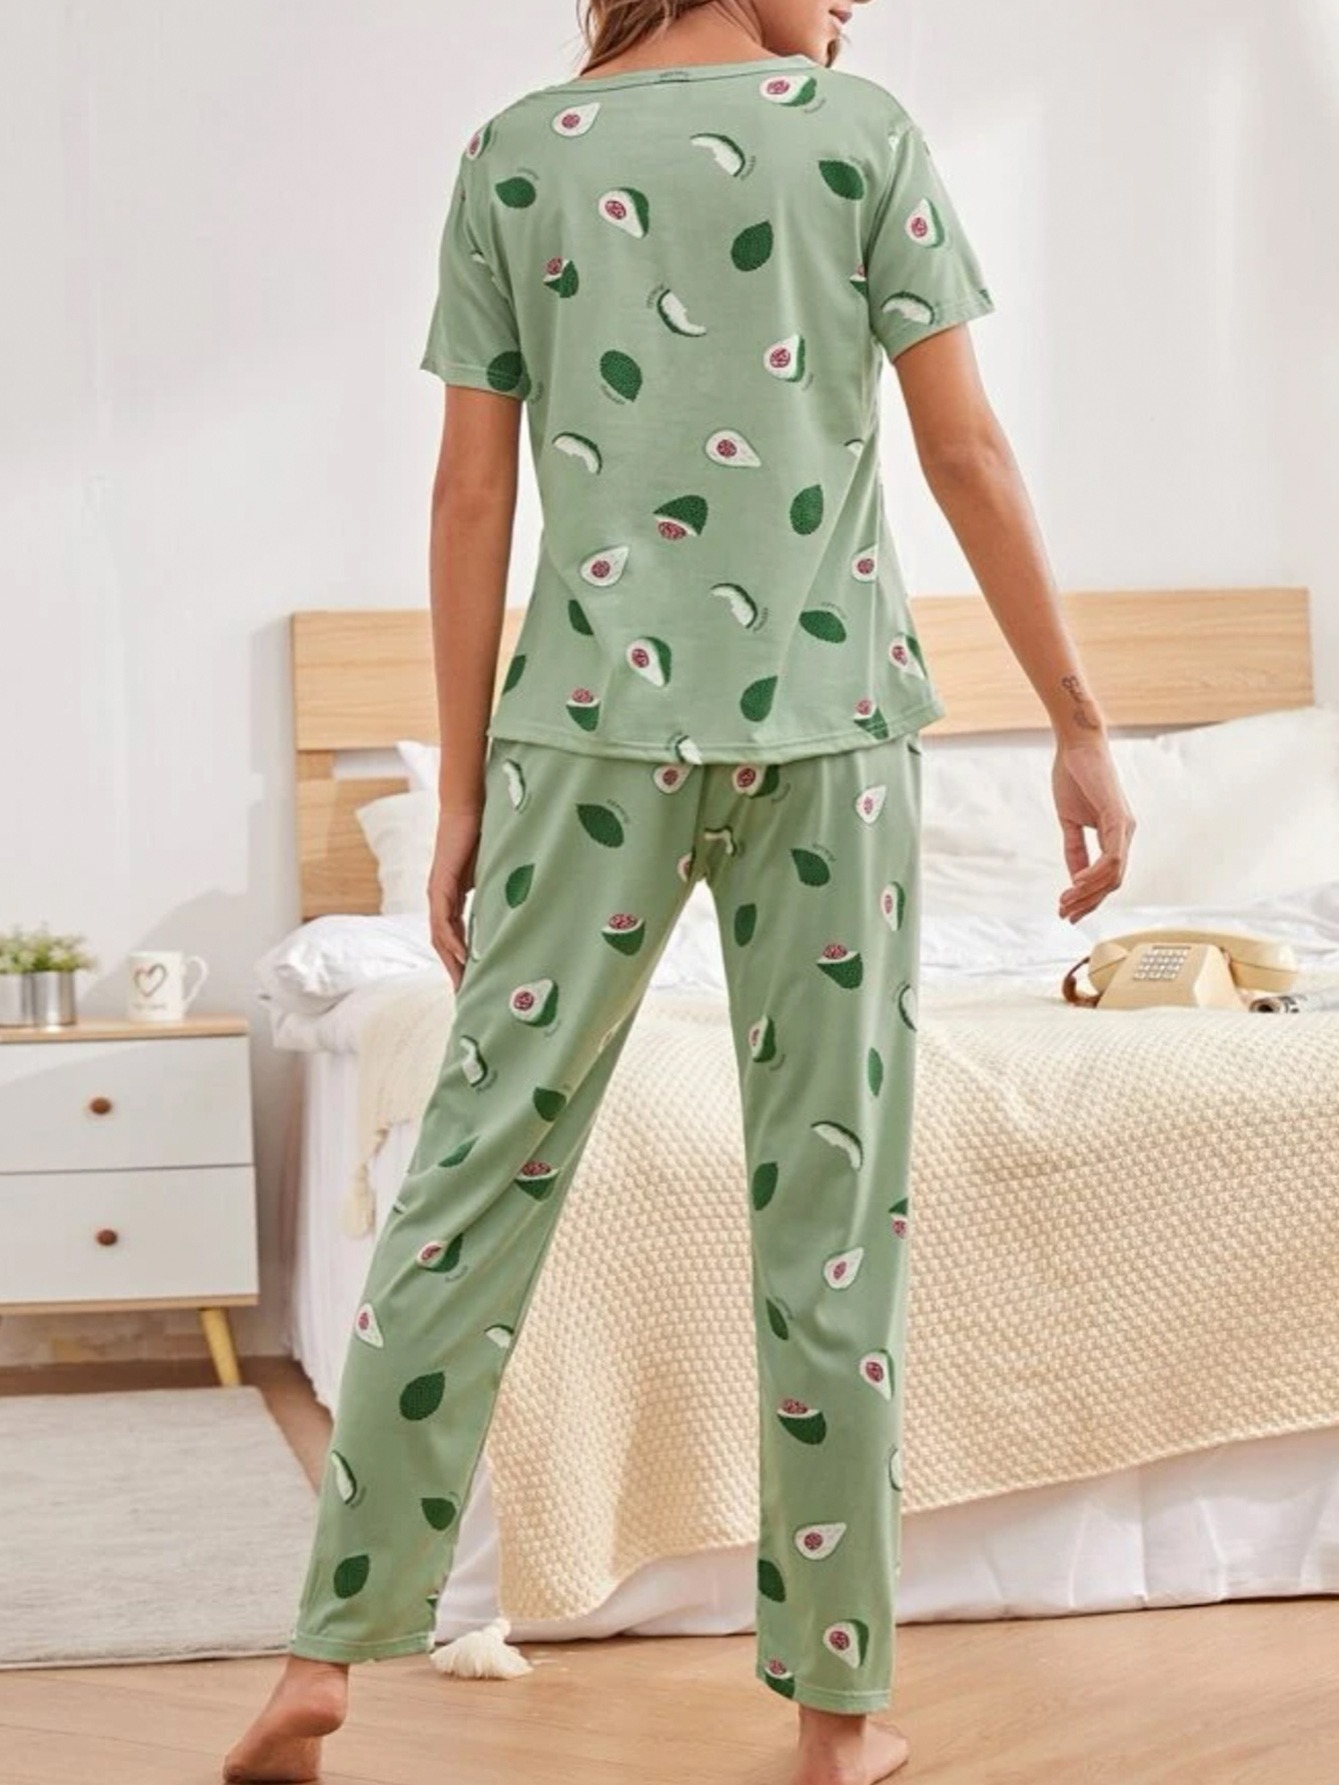 mejor pijama en pijamalindo.com